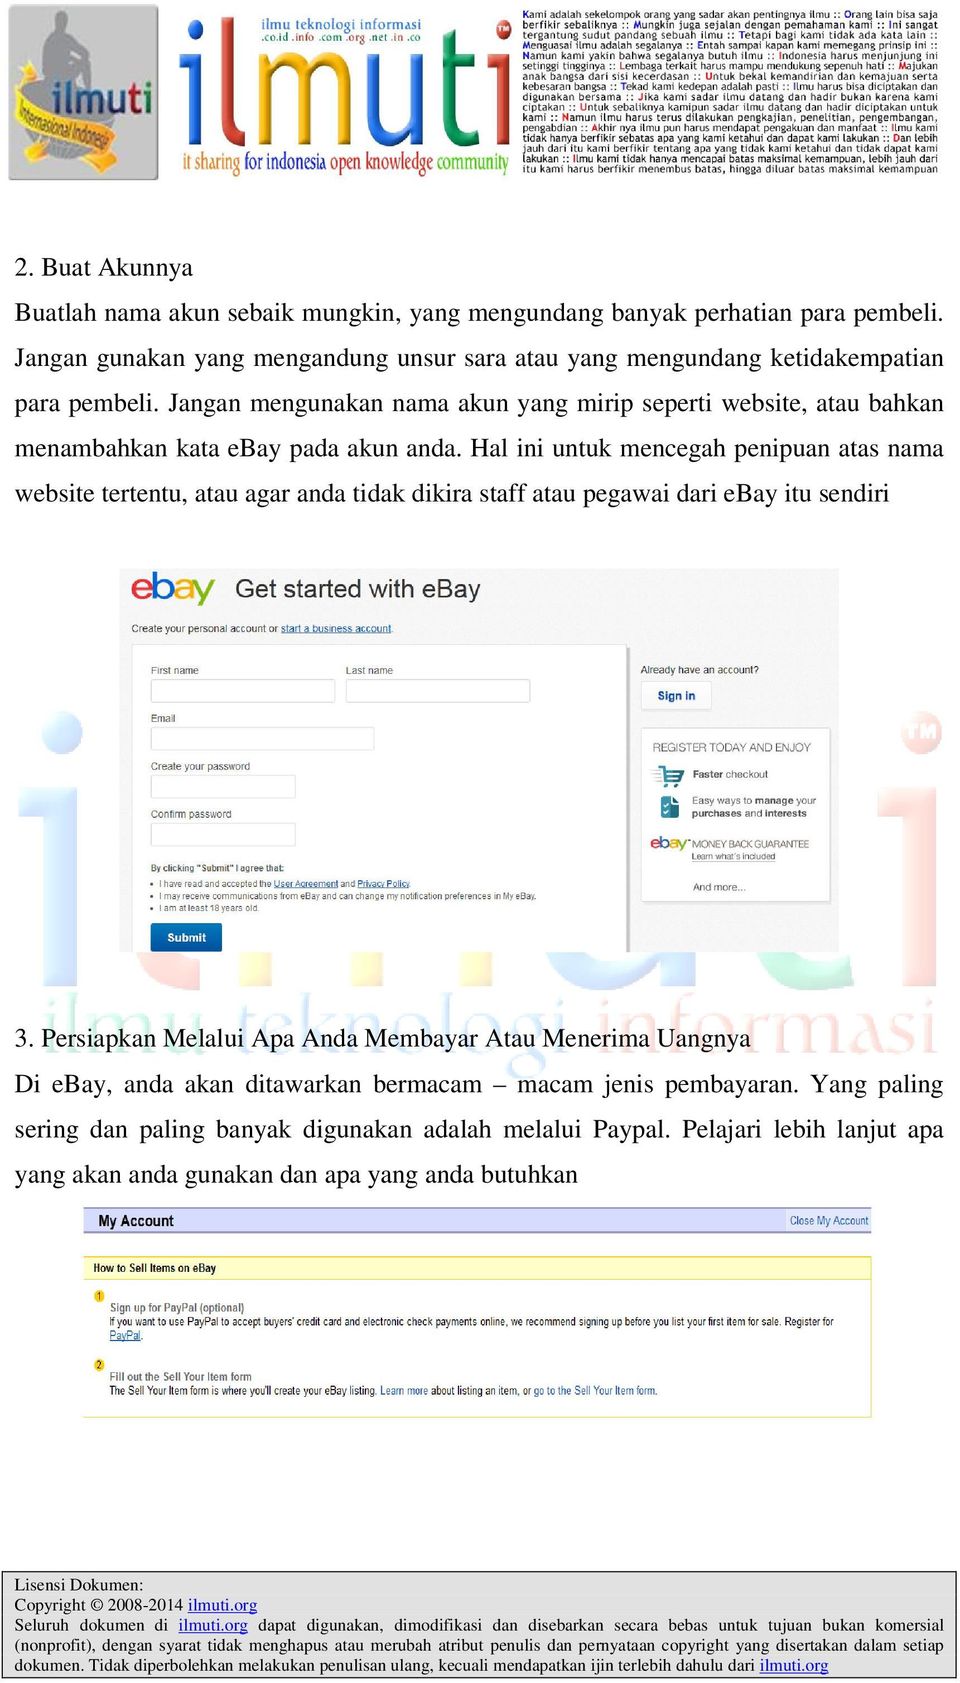 Jangan mengunakan nama akun yang mirip seperti website, atau bahkan menambahkan kata ebay pada akun anda.